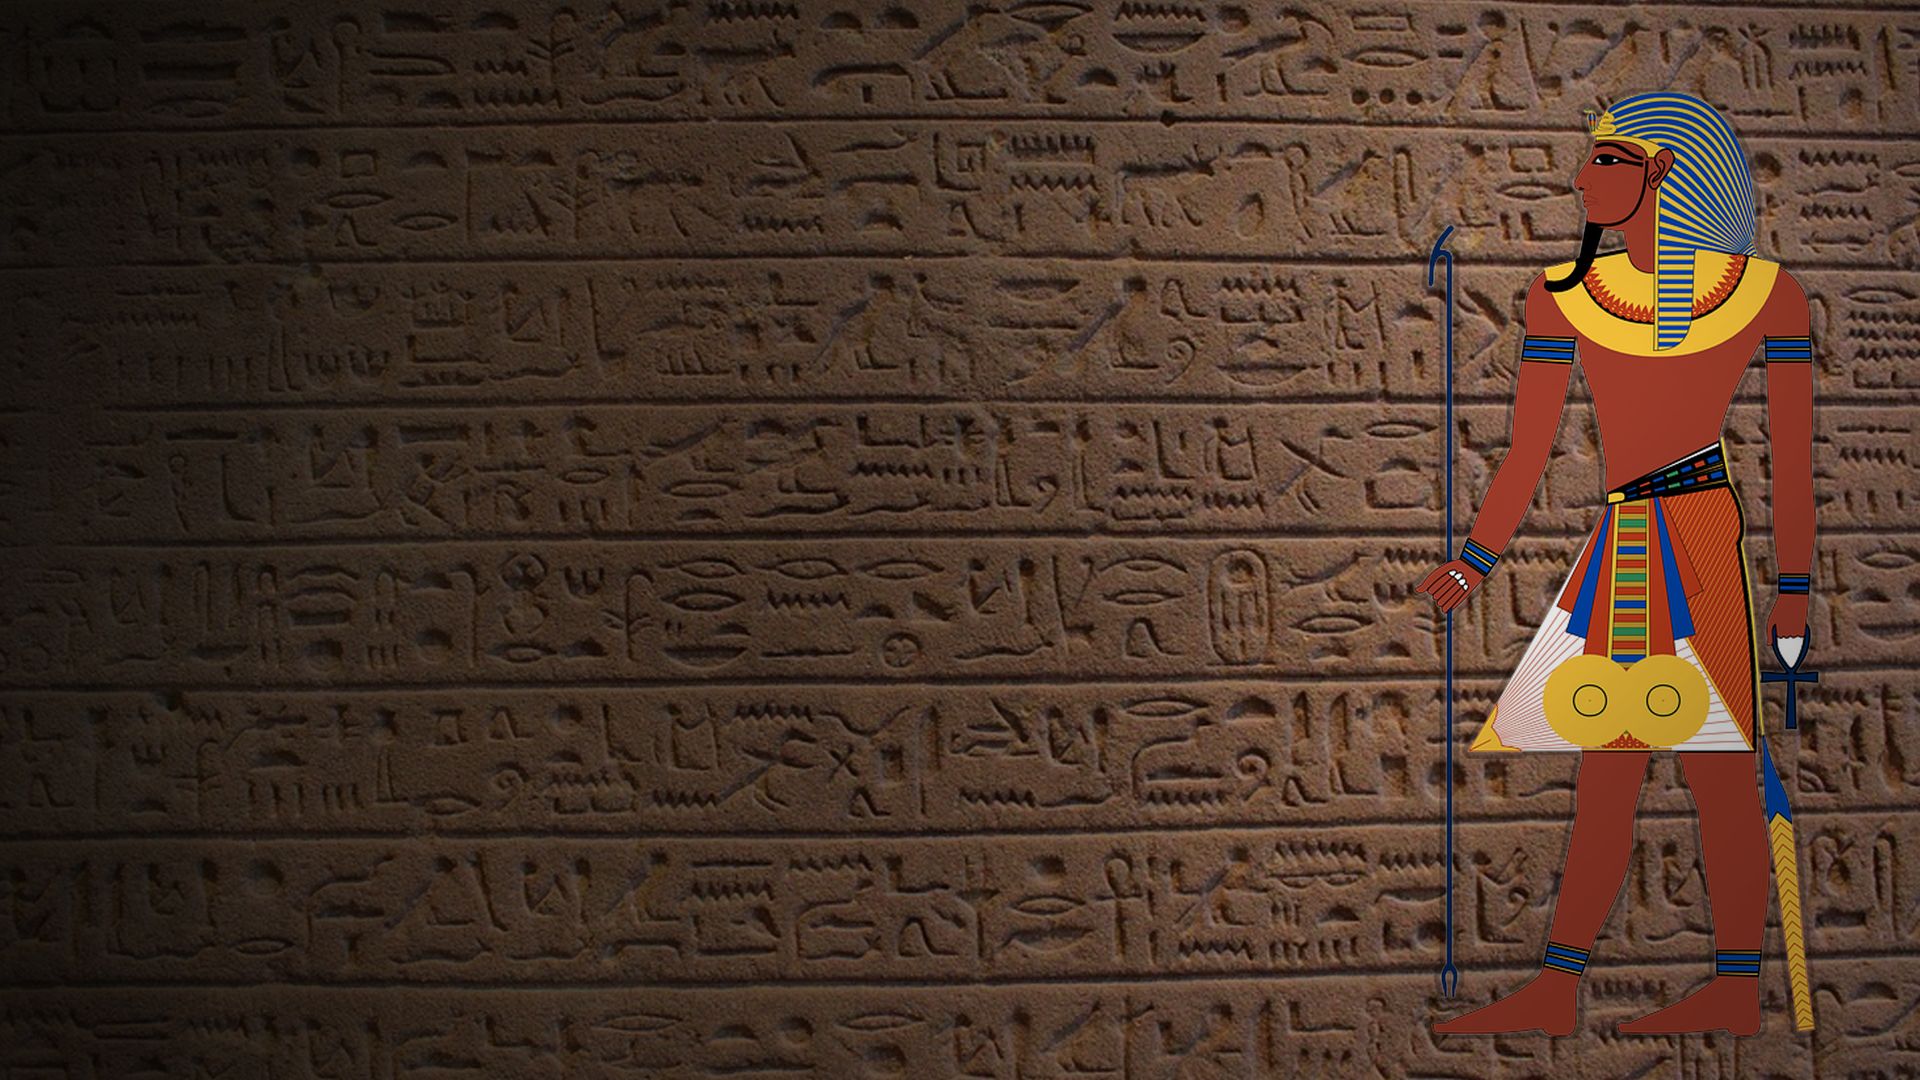 The Hidden History of Egypt